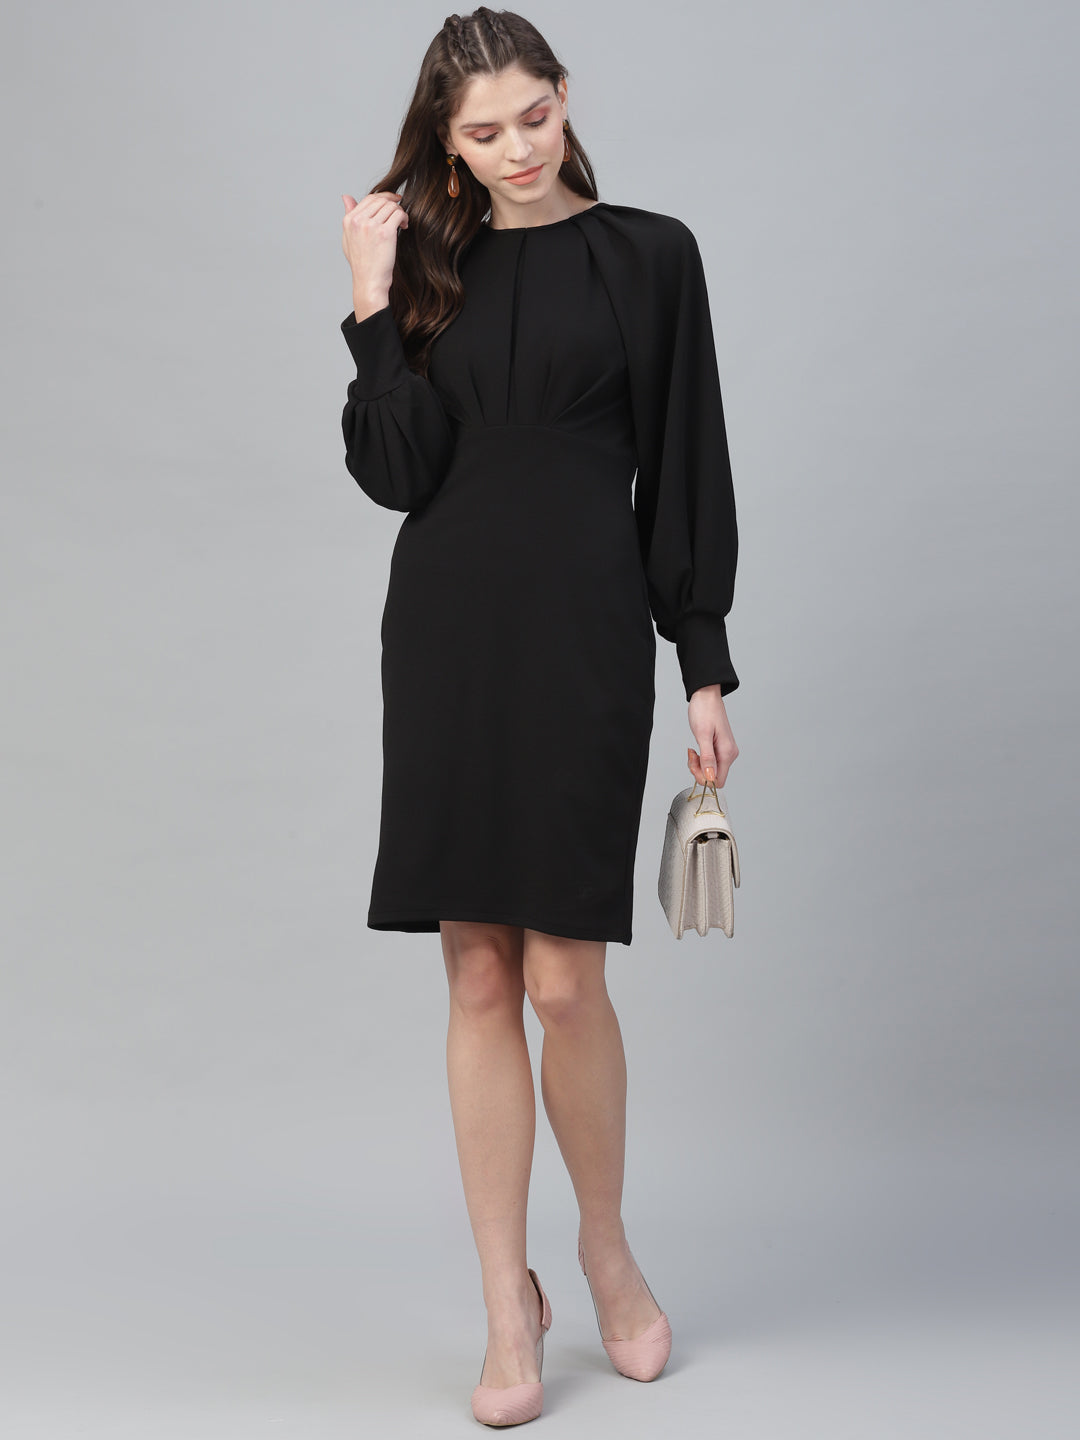 Athena Women Black Solid Sheath Dress - Athena Lifestyle